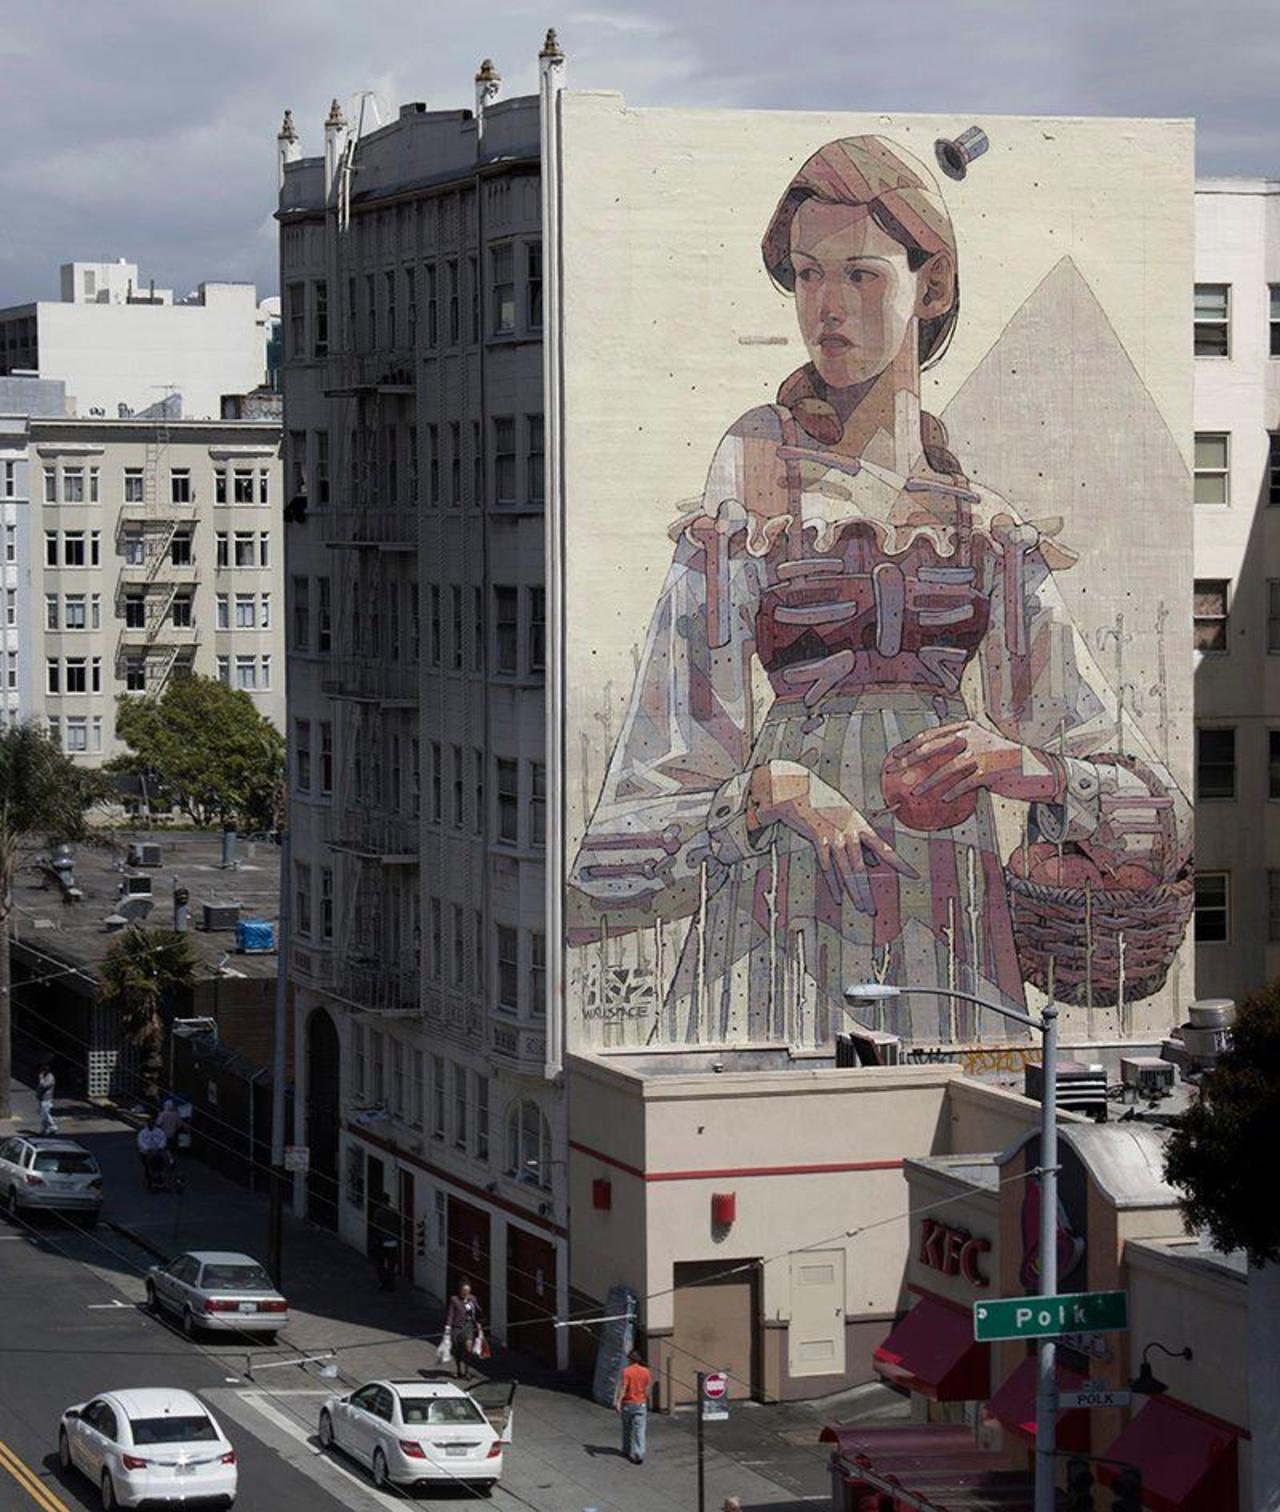 "@Pitchuskita: Aryz 
Tenderloin, San Francisco
#streetart #art #graffiti #urbanart #mural http://t.co/HVJebIct4l"